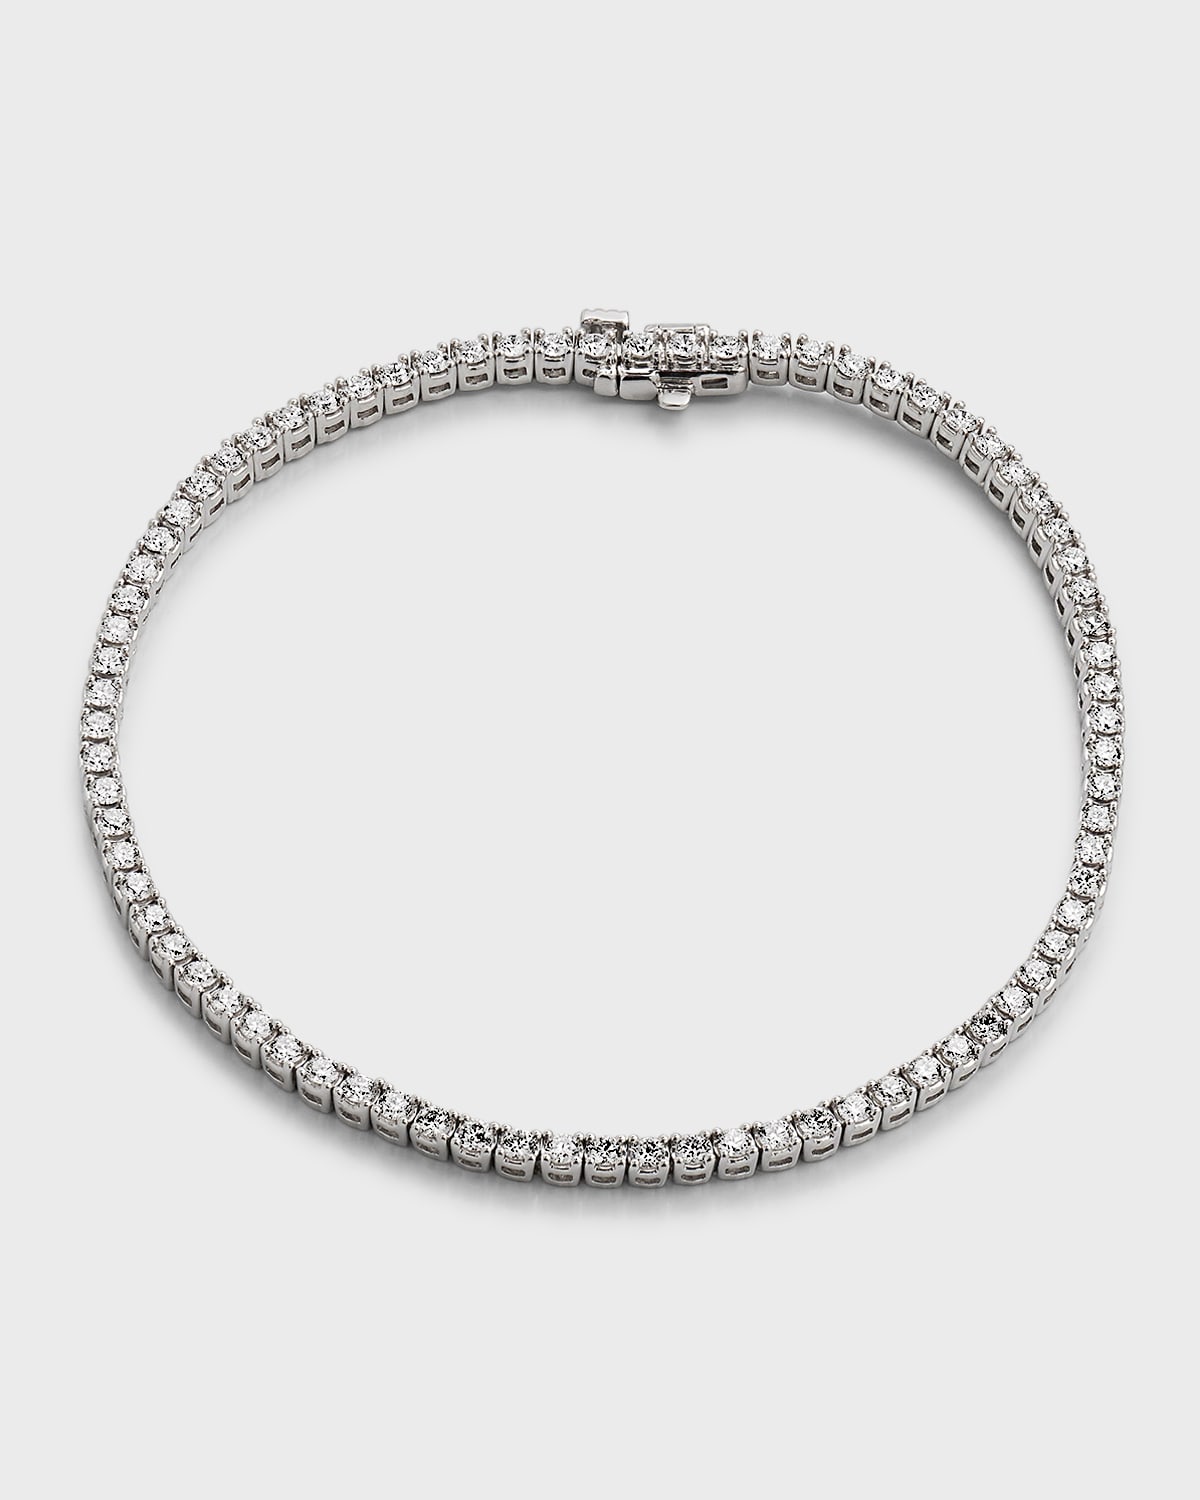 Neiman Marcus Diamonds 18k White Gold Diamond Tennis Bracelet